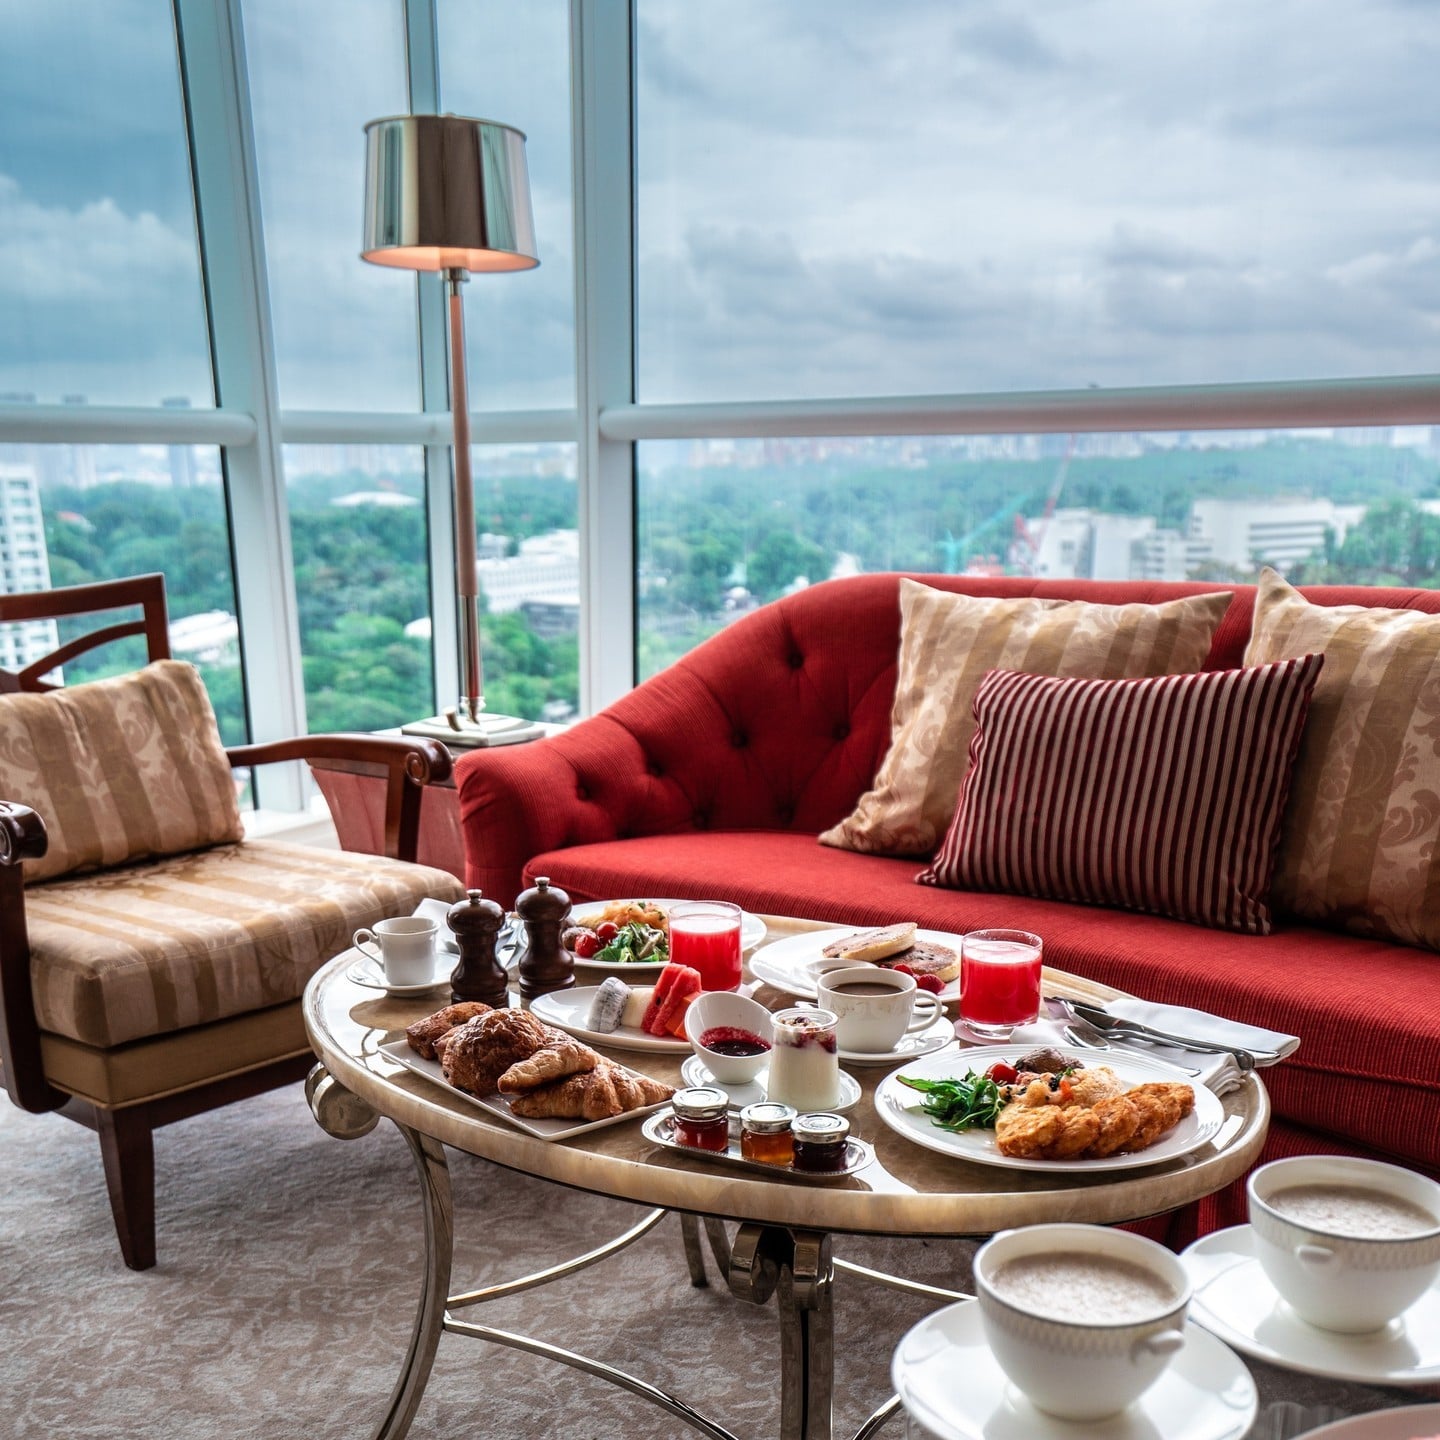 Hotel suites in Singapore - St Regis 24h butler service